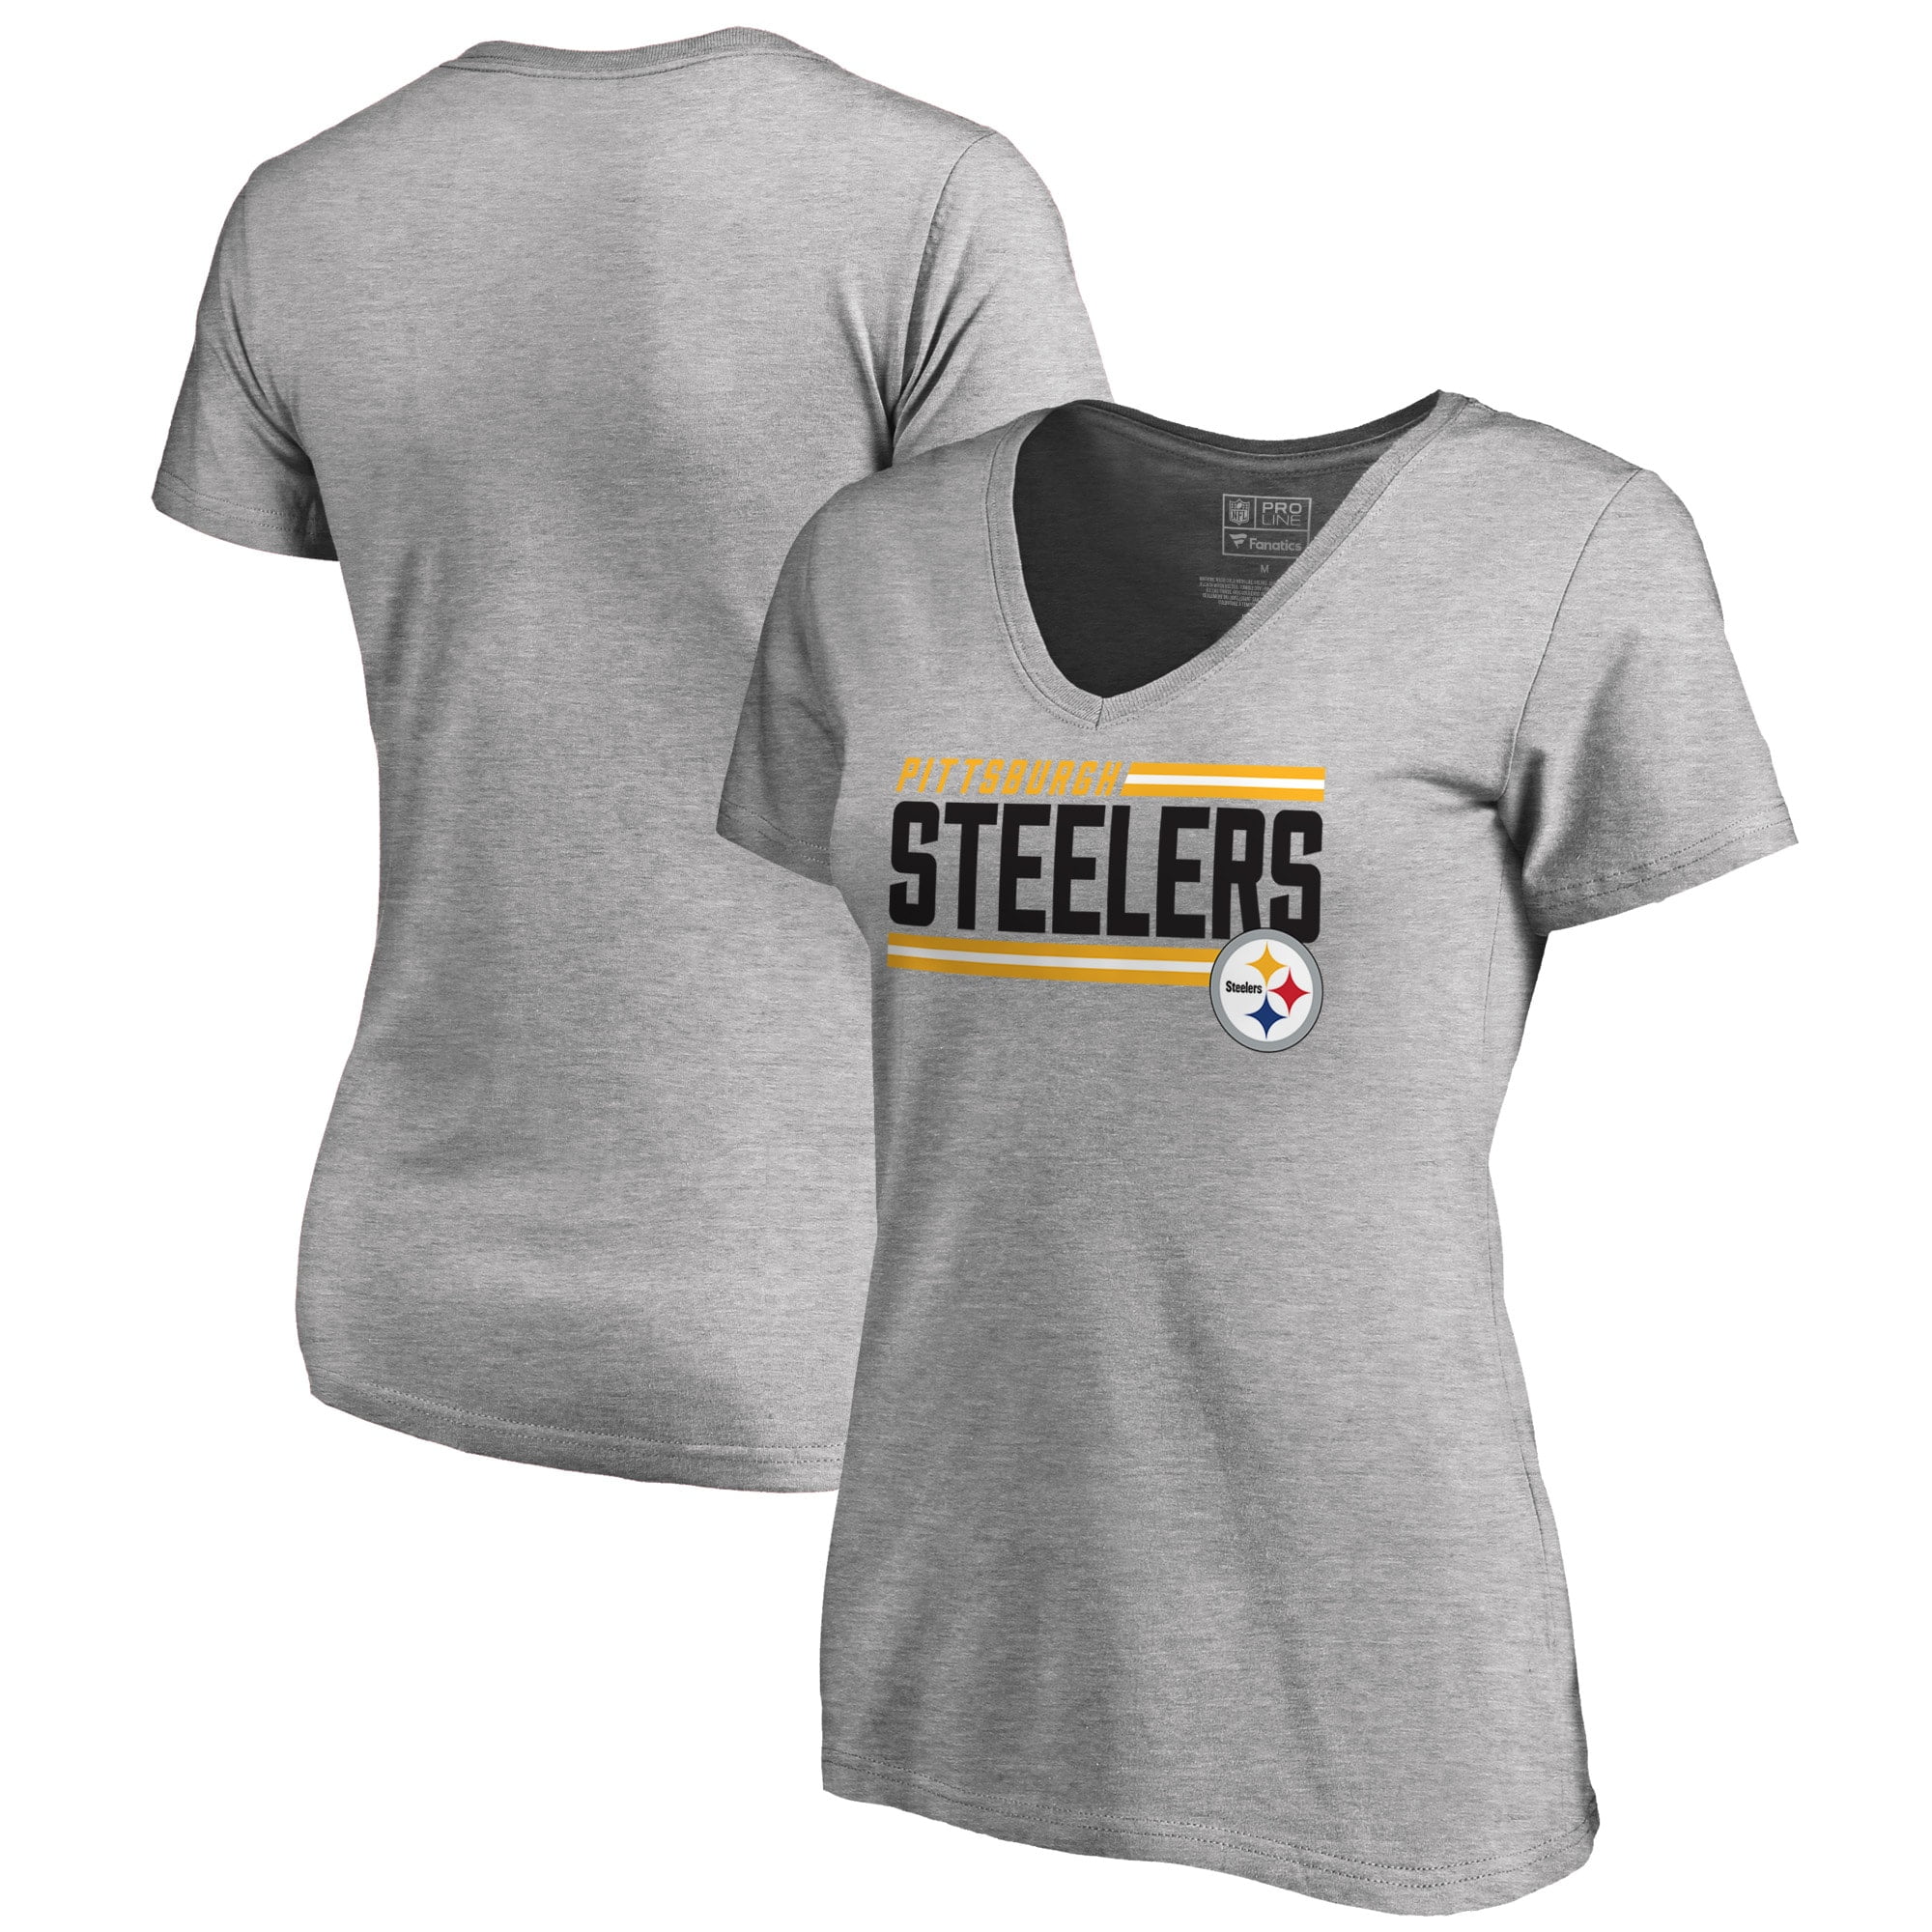 women's plus size steelers shirts